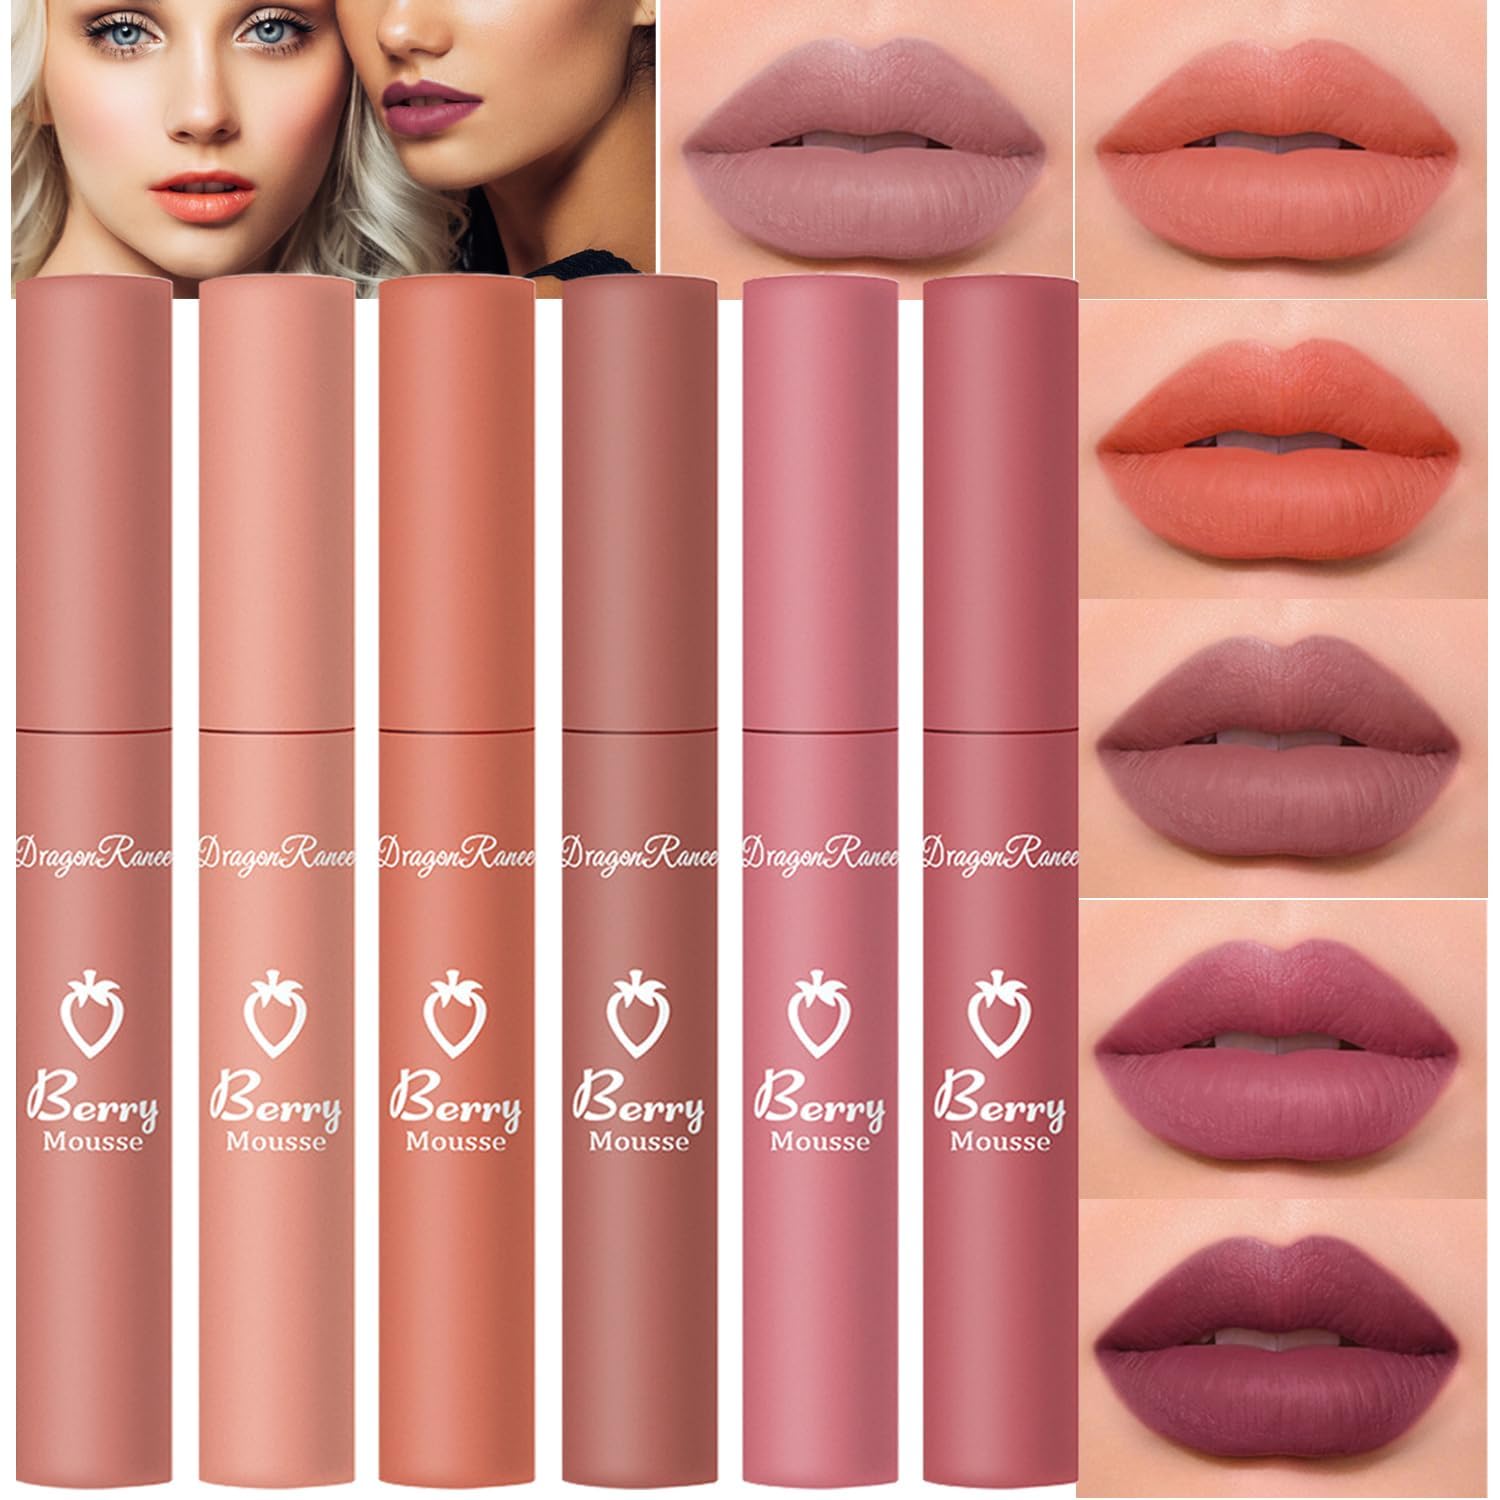 6 Colors Matte Lipstick Set,Natural Nude Lipstick Lip Makeup Kit, Velvet Nourishing Lip Gloss, Non-Stick Cup Long Lasting Not Fade Waterproof Lip Stain Liquid Lipstick Gift Set For Women (SET A)